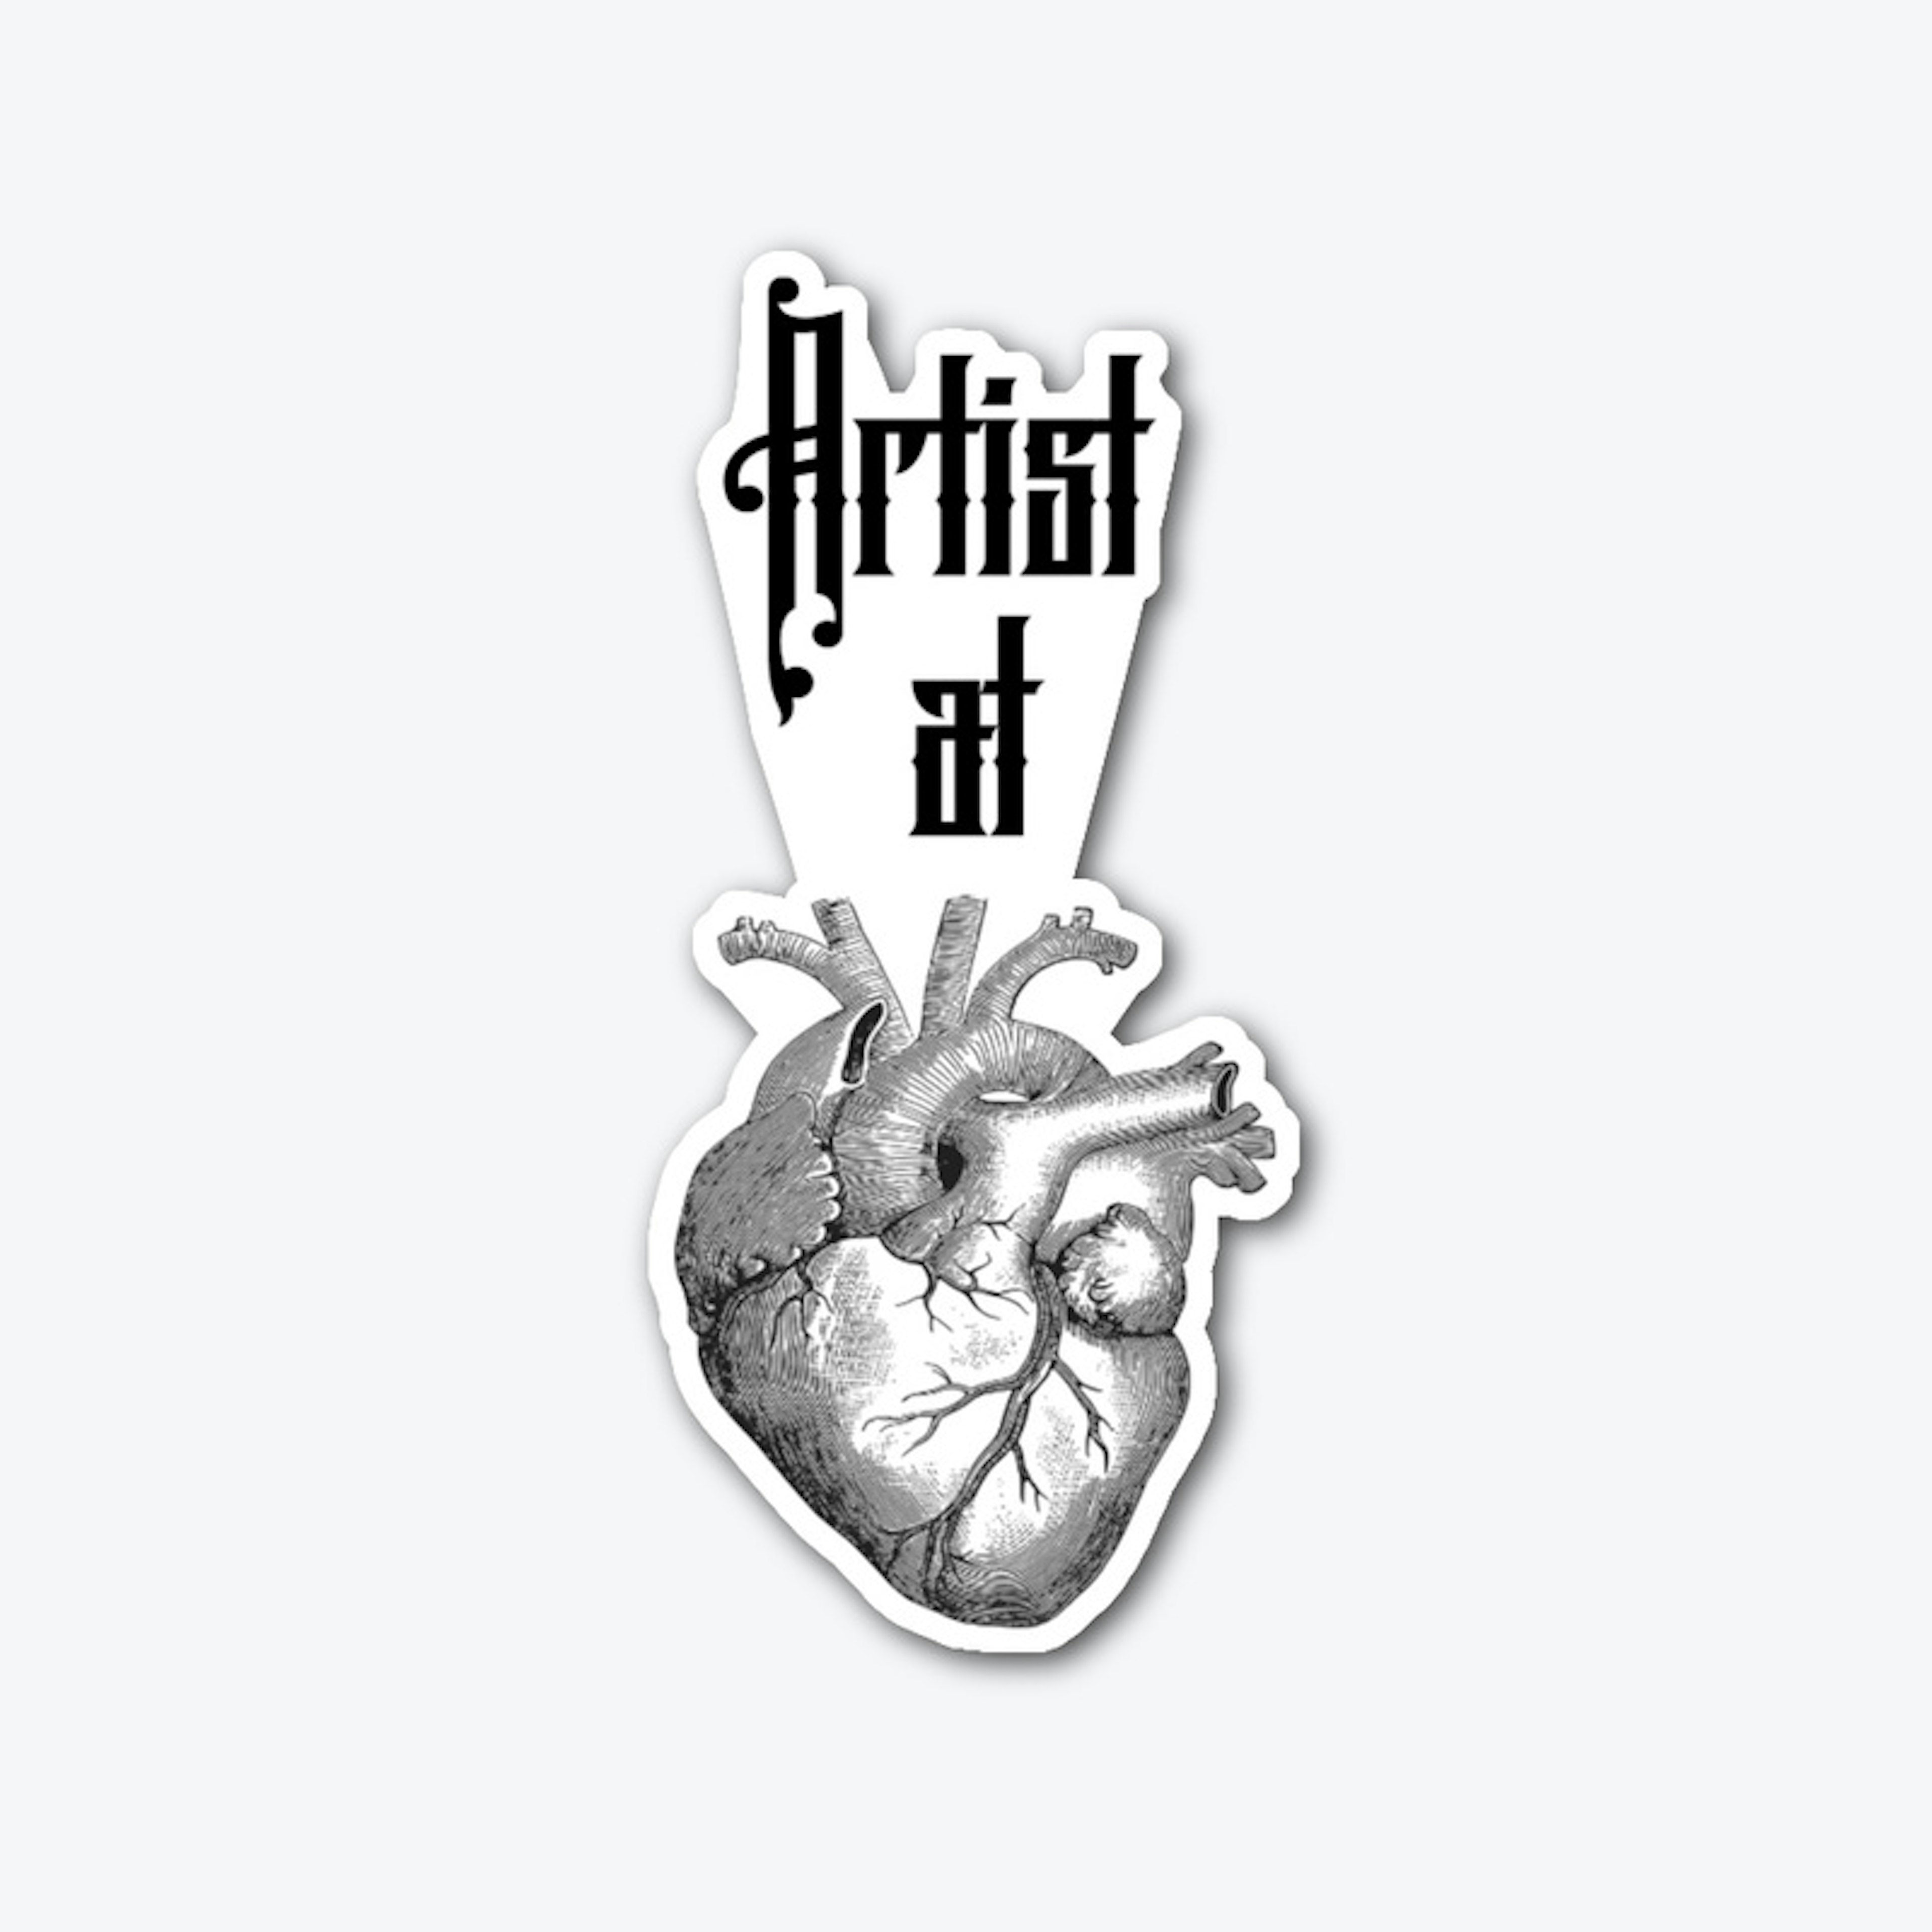 Artist At Heart sticker